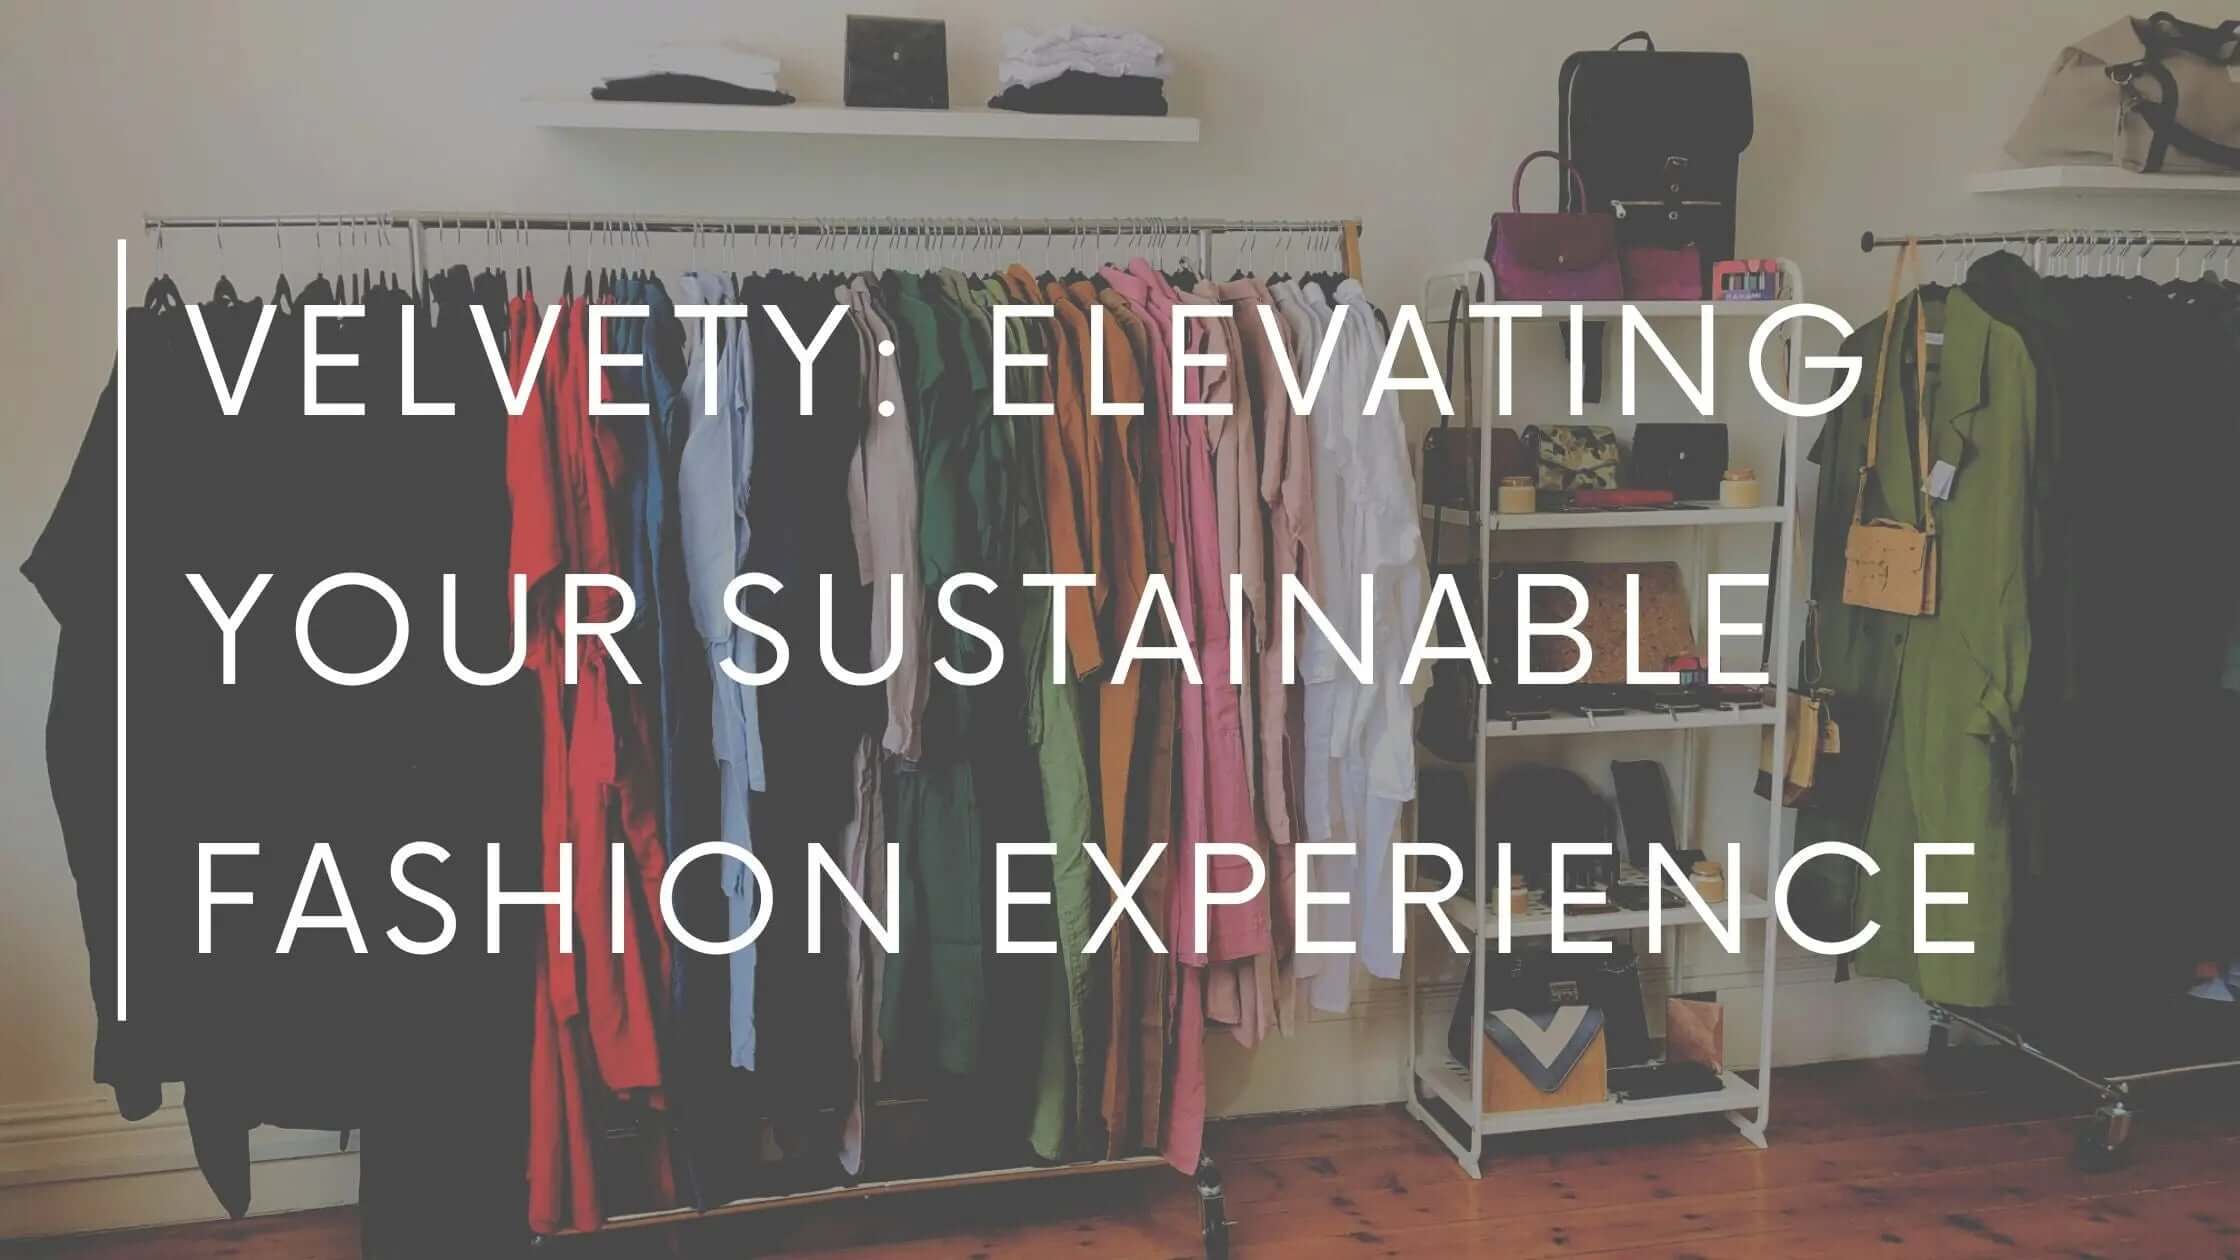 Velvety: Elevating Your Sustainable Fashion Experience